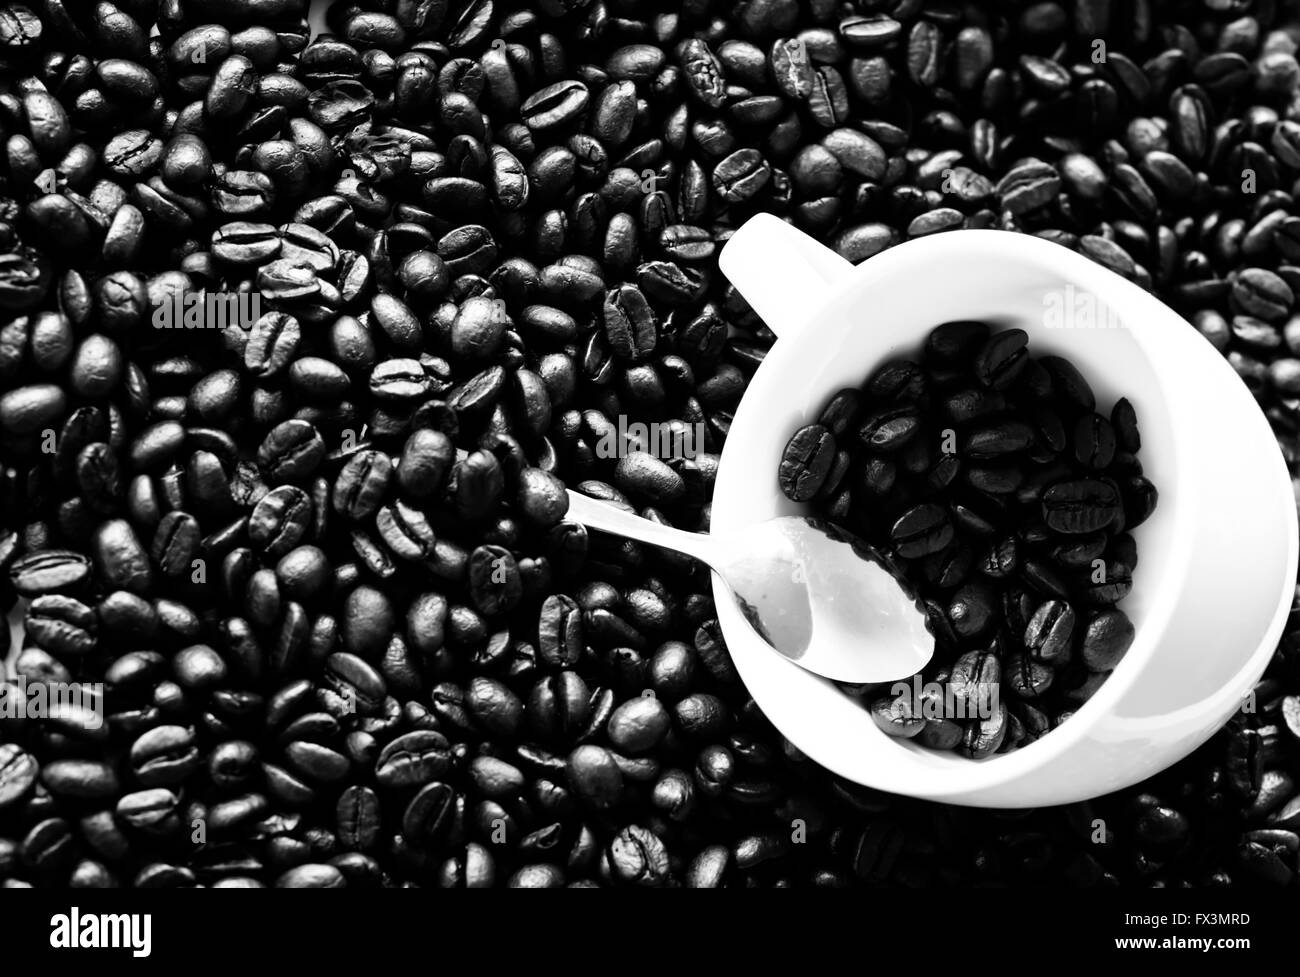 Bean Logo Black Insulated Mug - Catholic Coffee